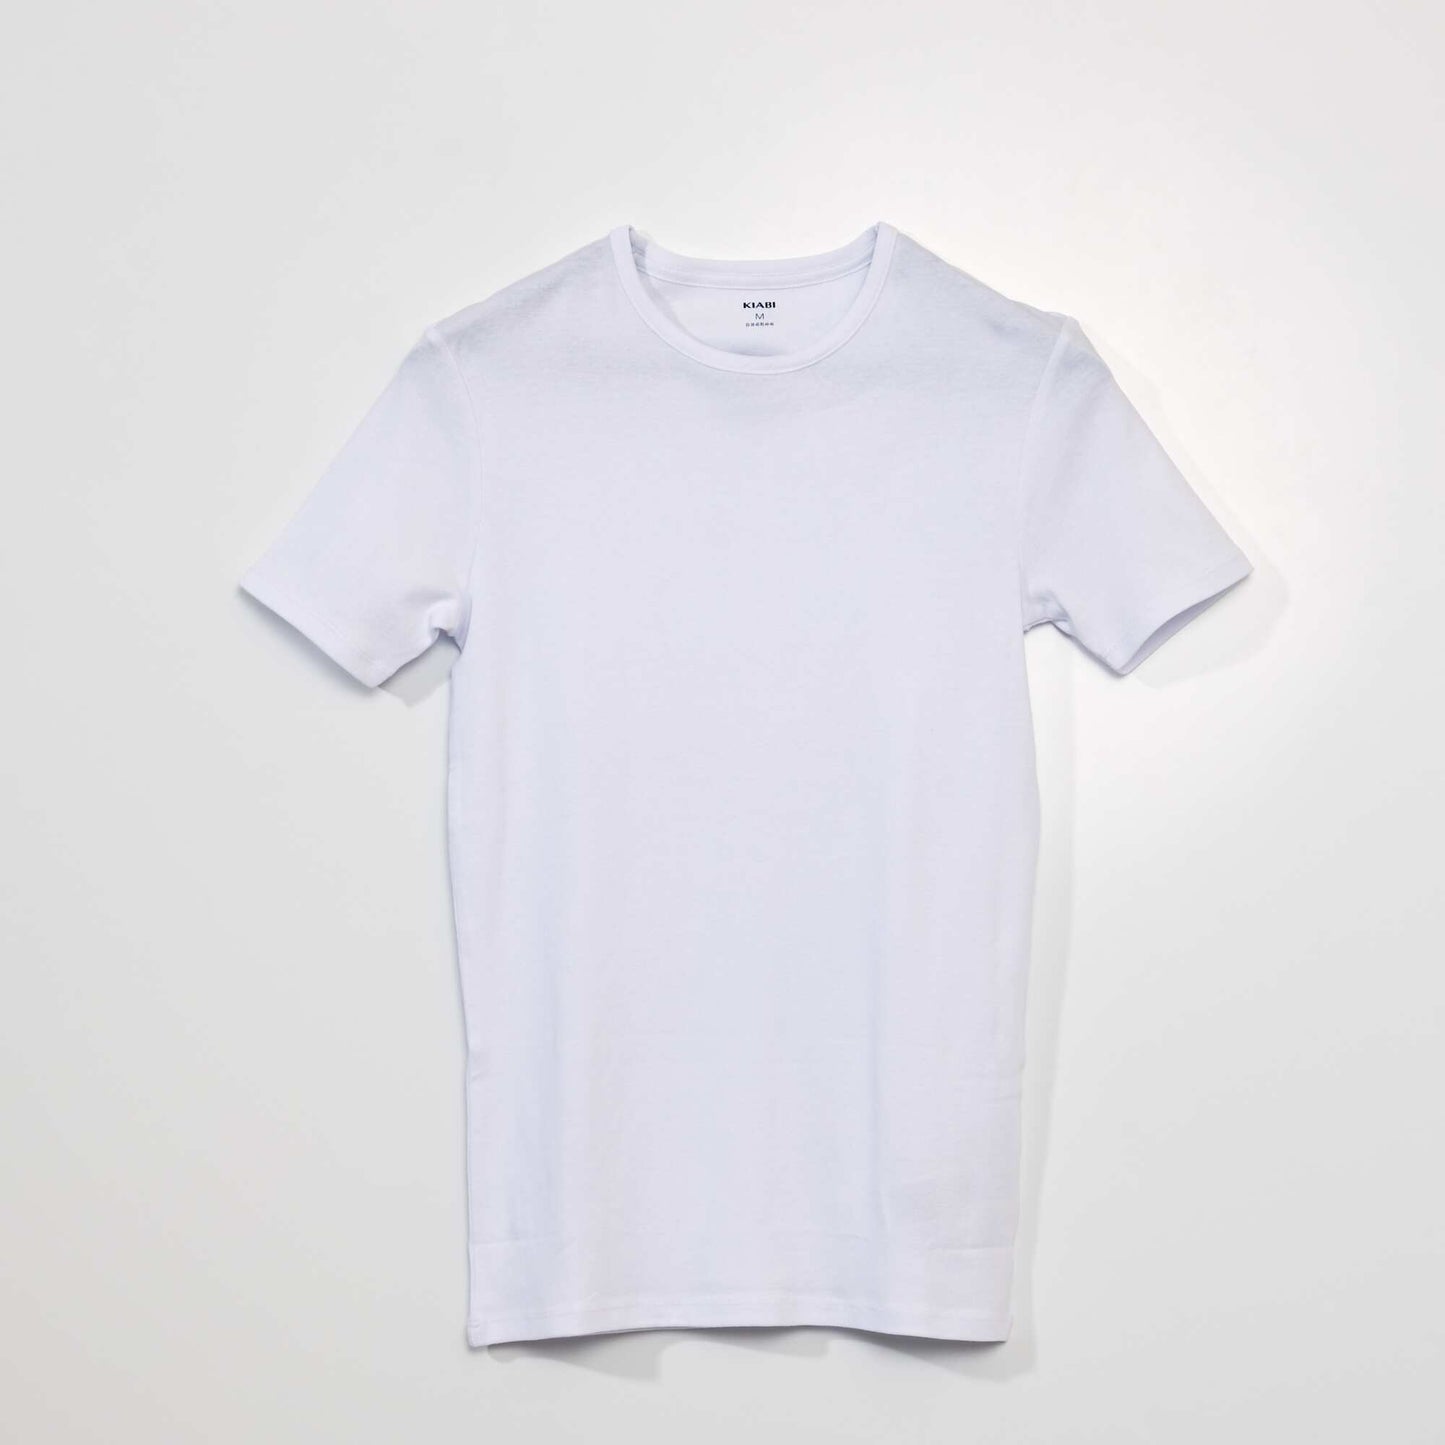 Pack of plain T-shirts white